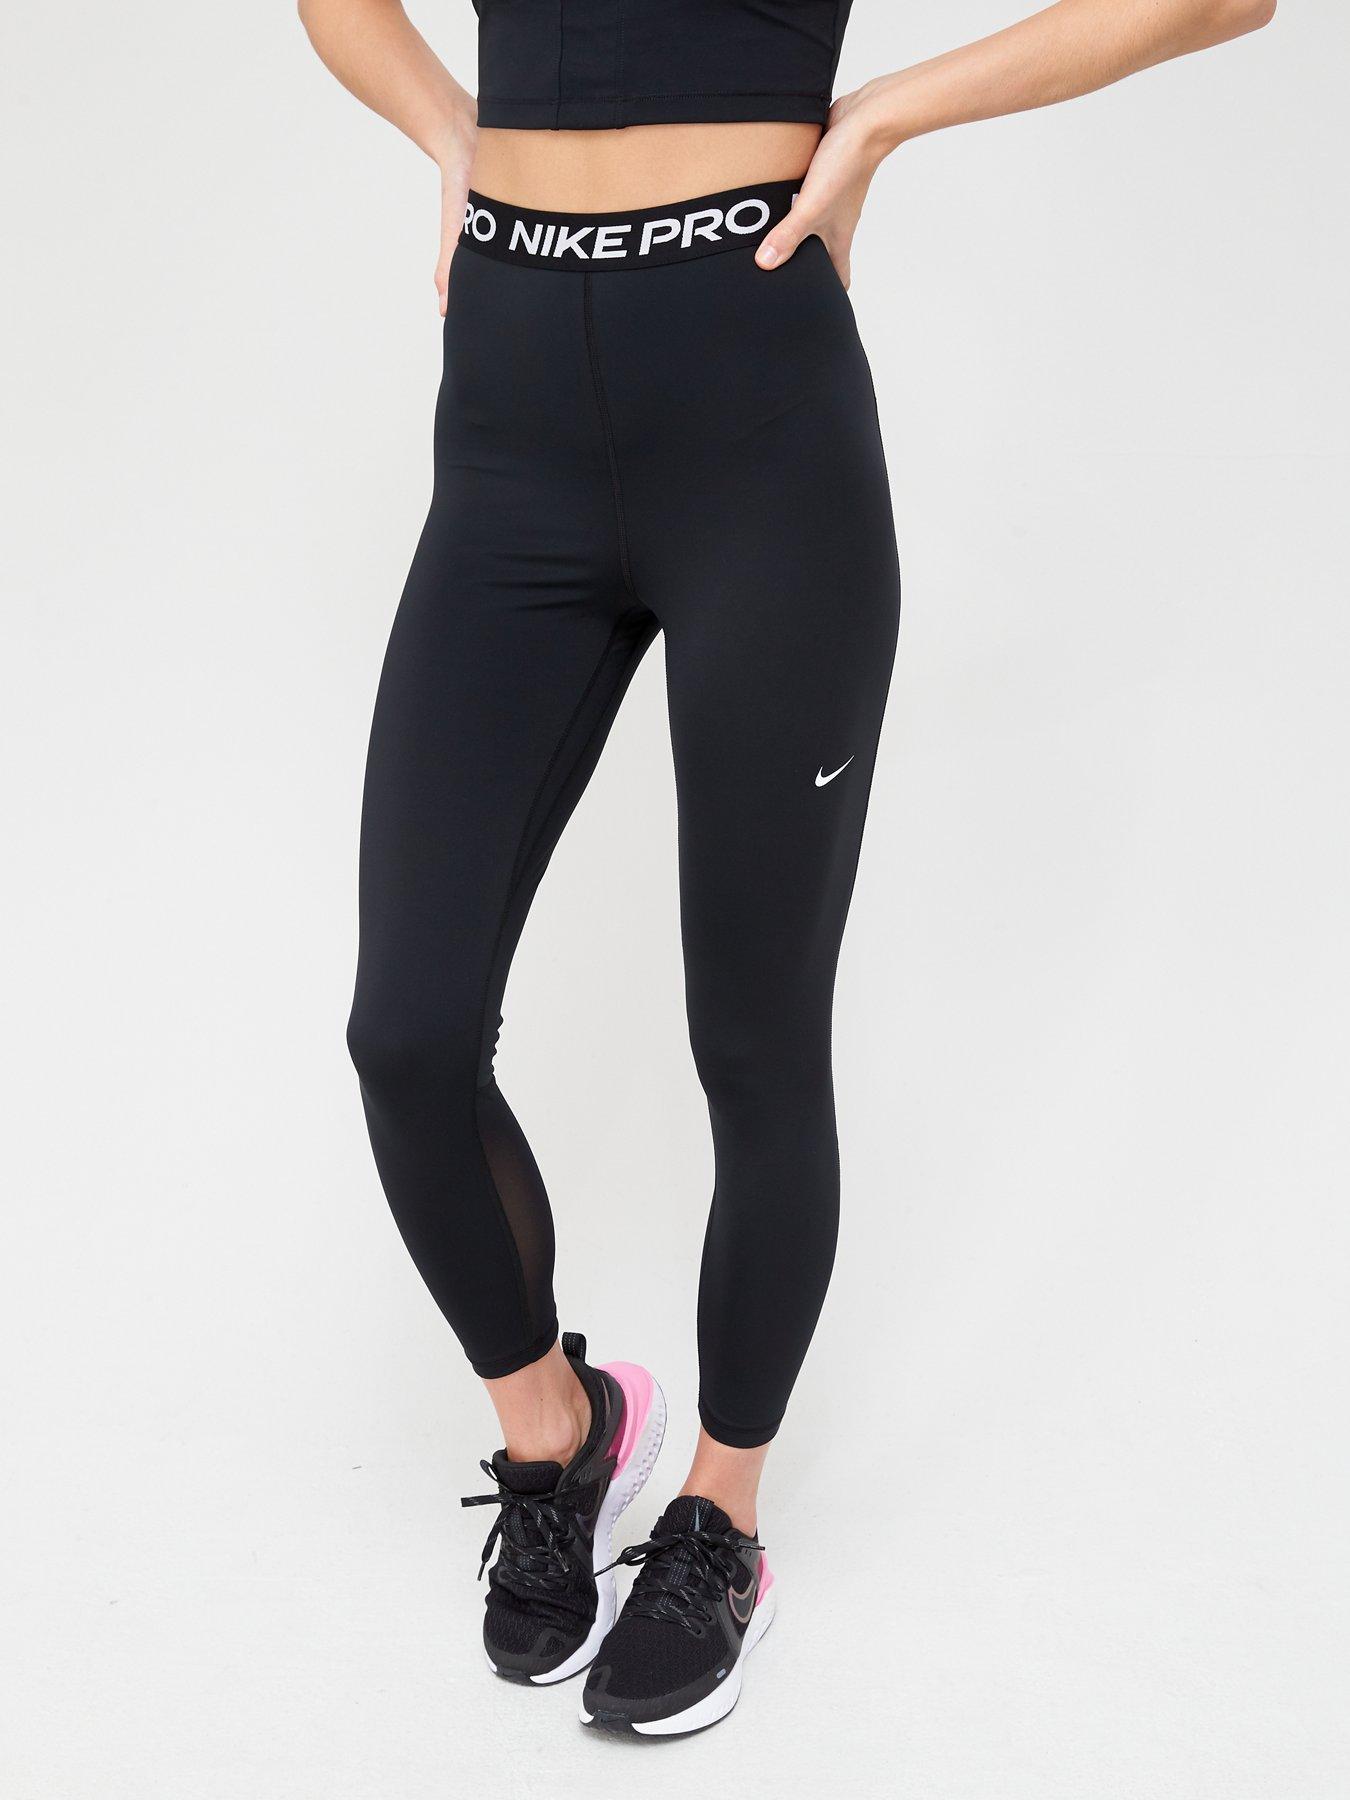 Nike Women's Pro Hyperwarm Training Tights Black/White Size Small